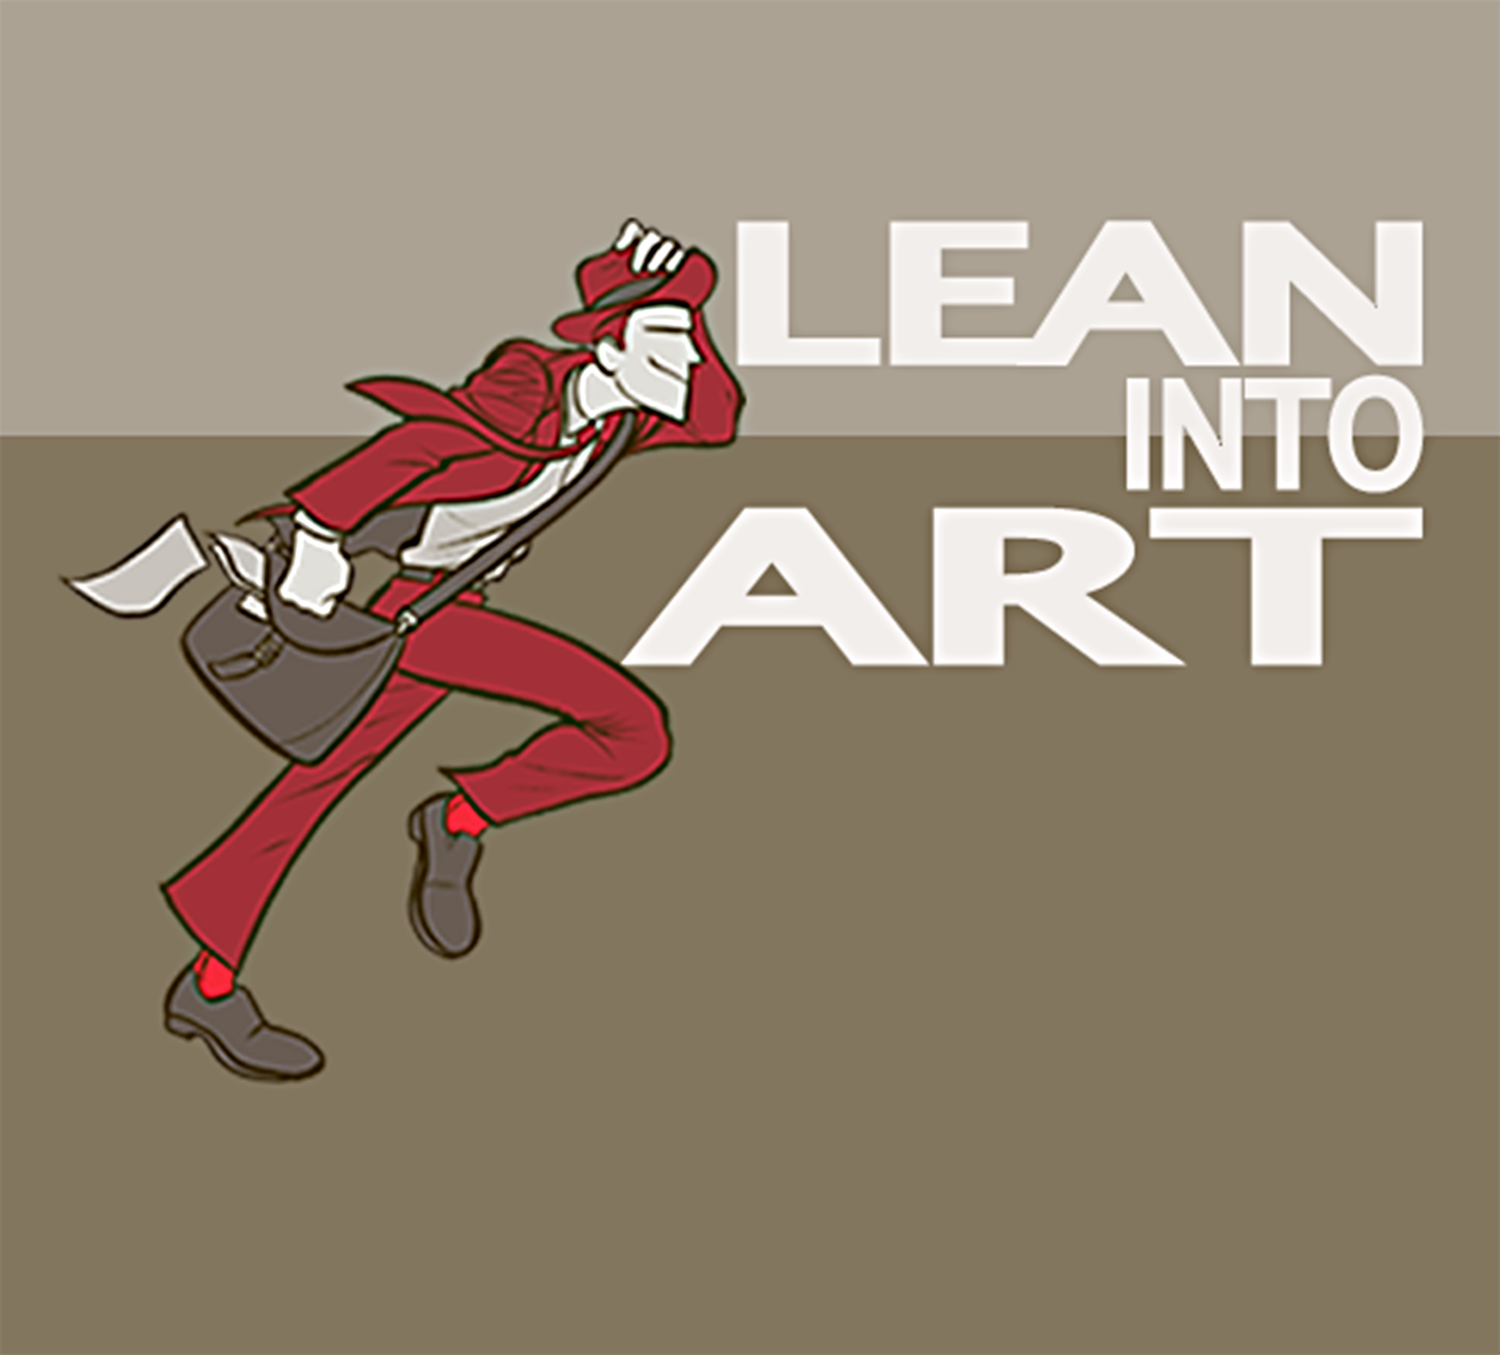 Lean into. Be into Art. Lean into it. Lean into the Touch. Cast art